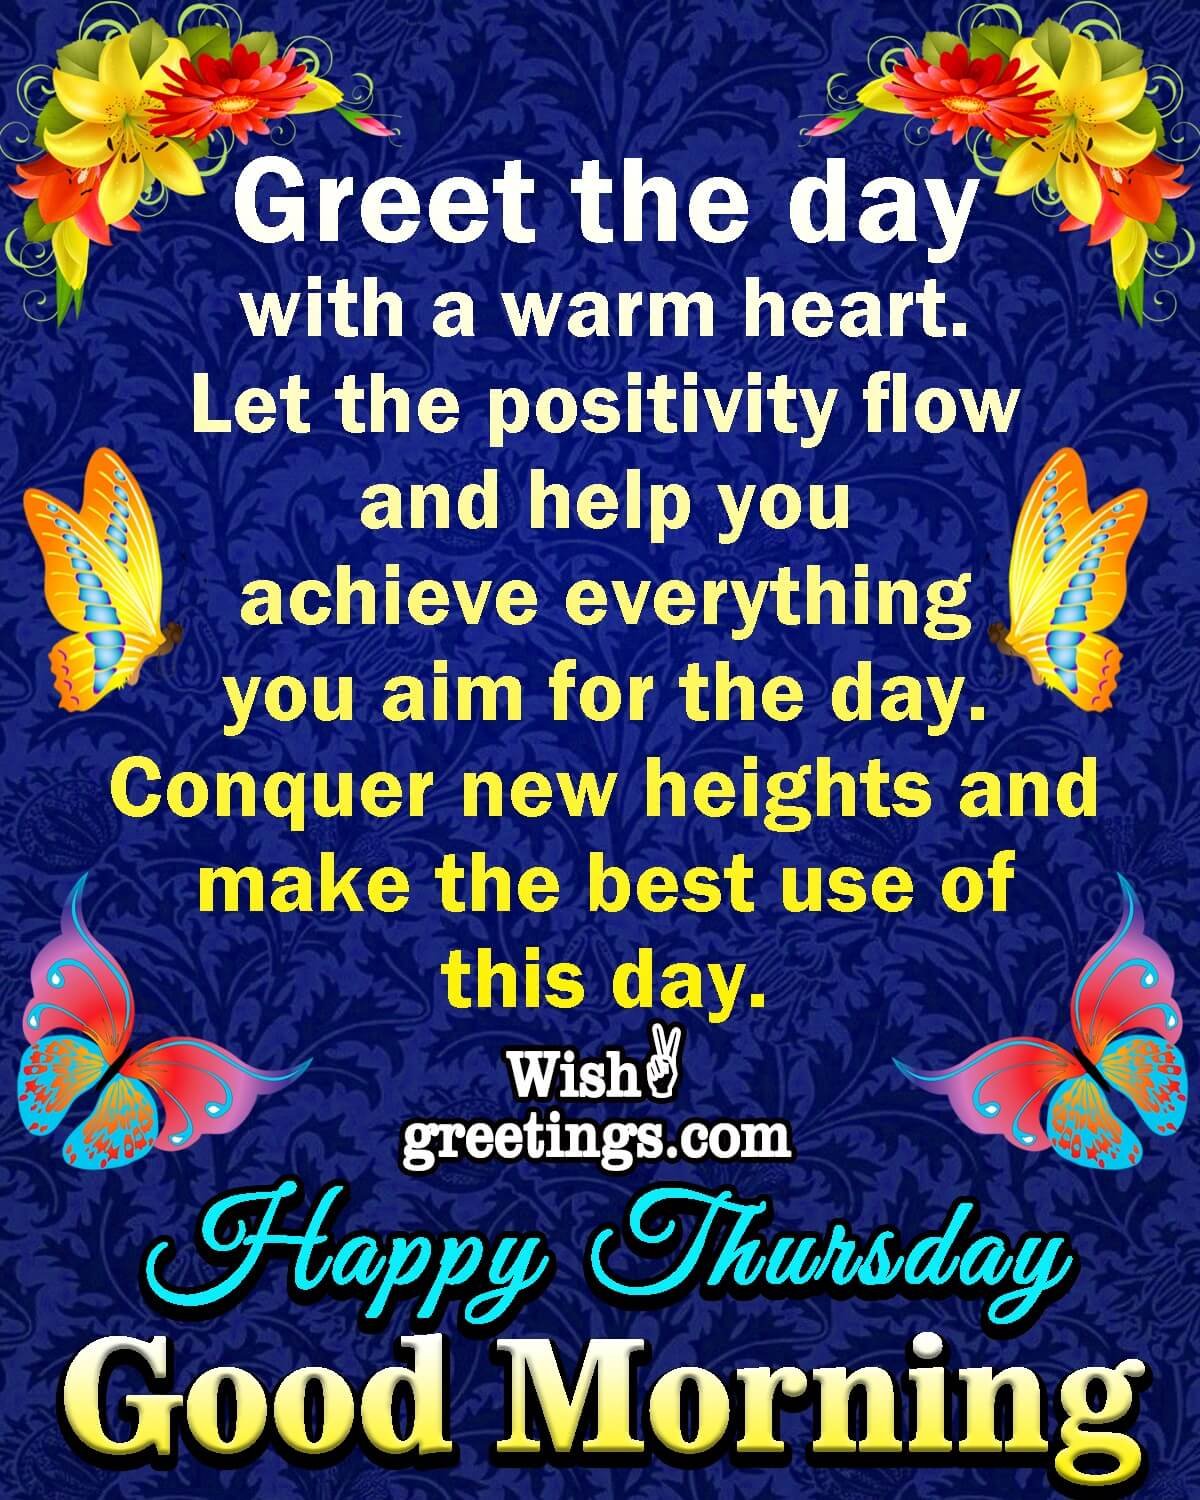 Happy Thursday Morning Greetings